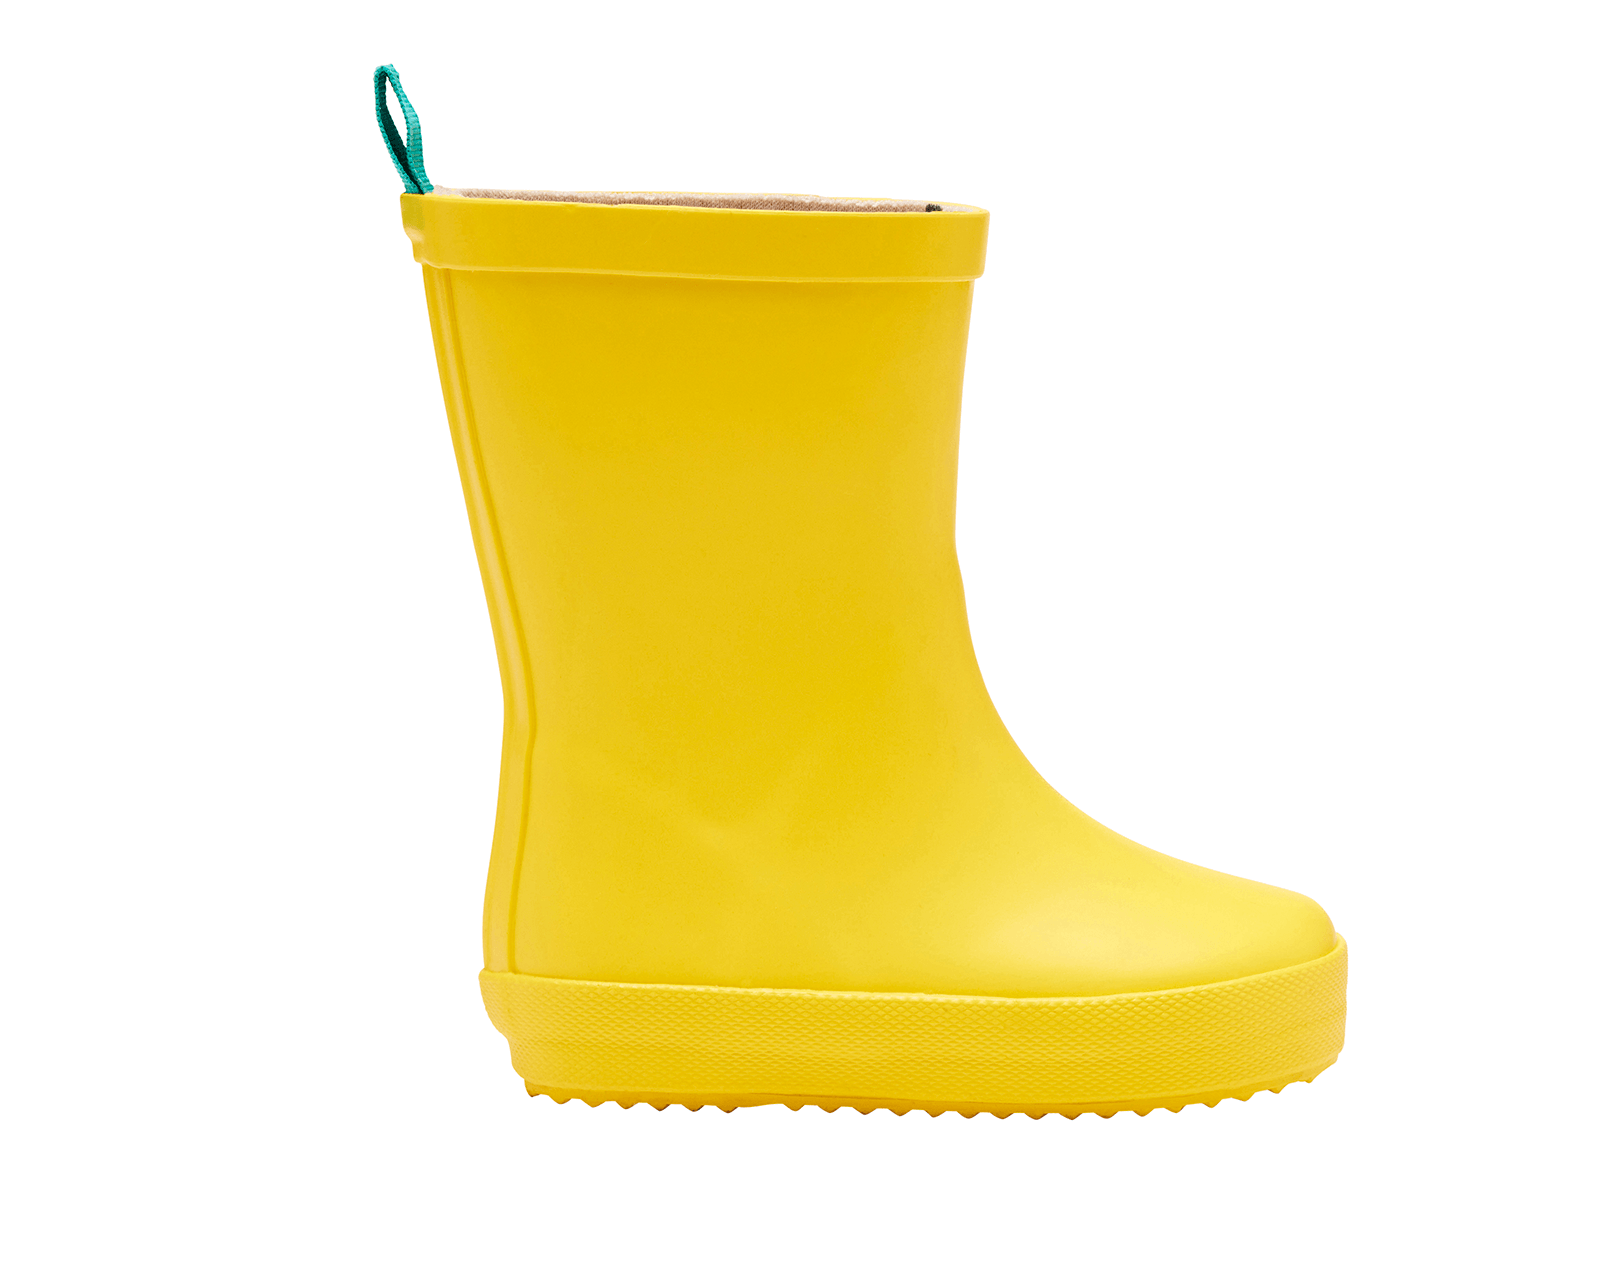 Ten Little Kids Rain Boots Review - Affordable Barefoot Rubber Boots!